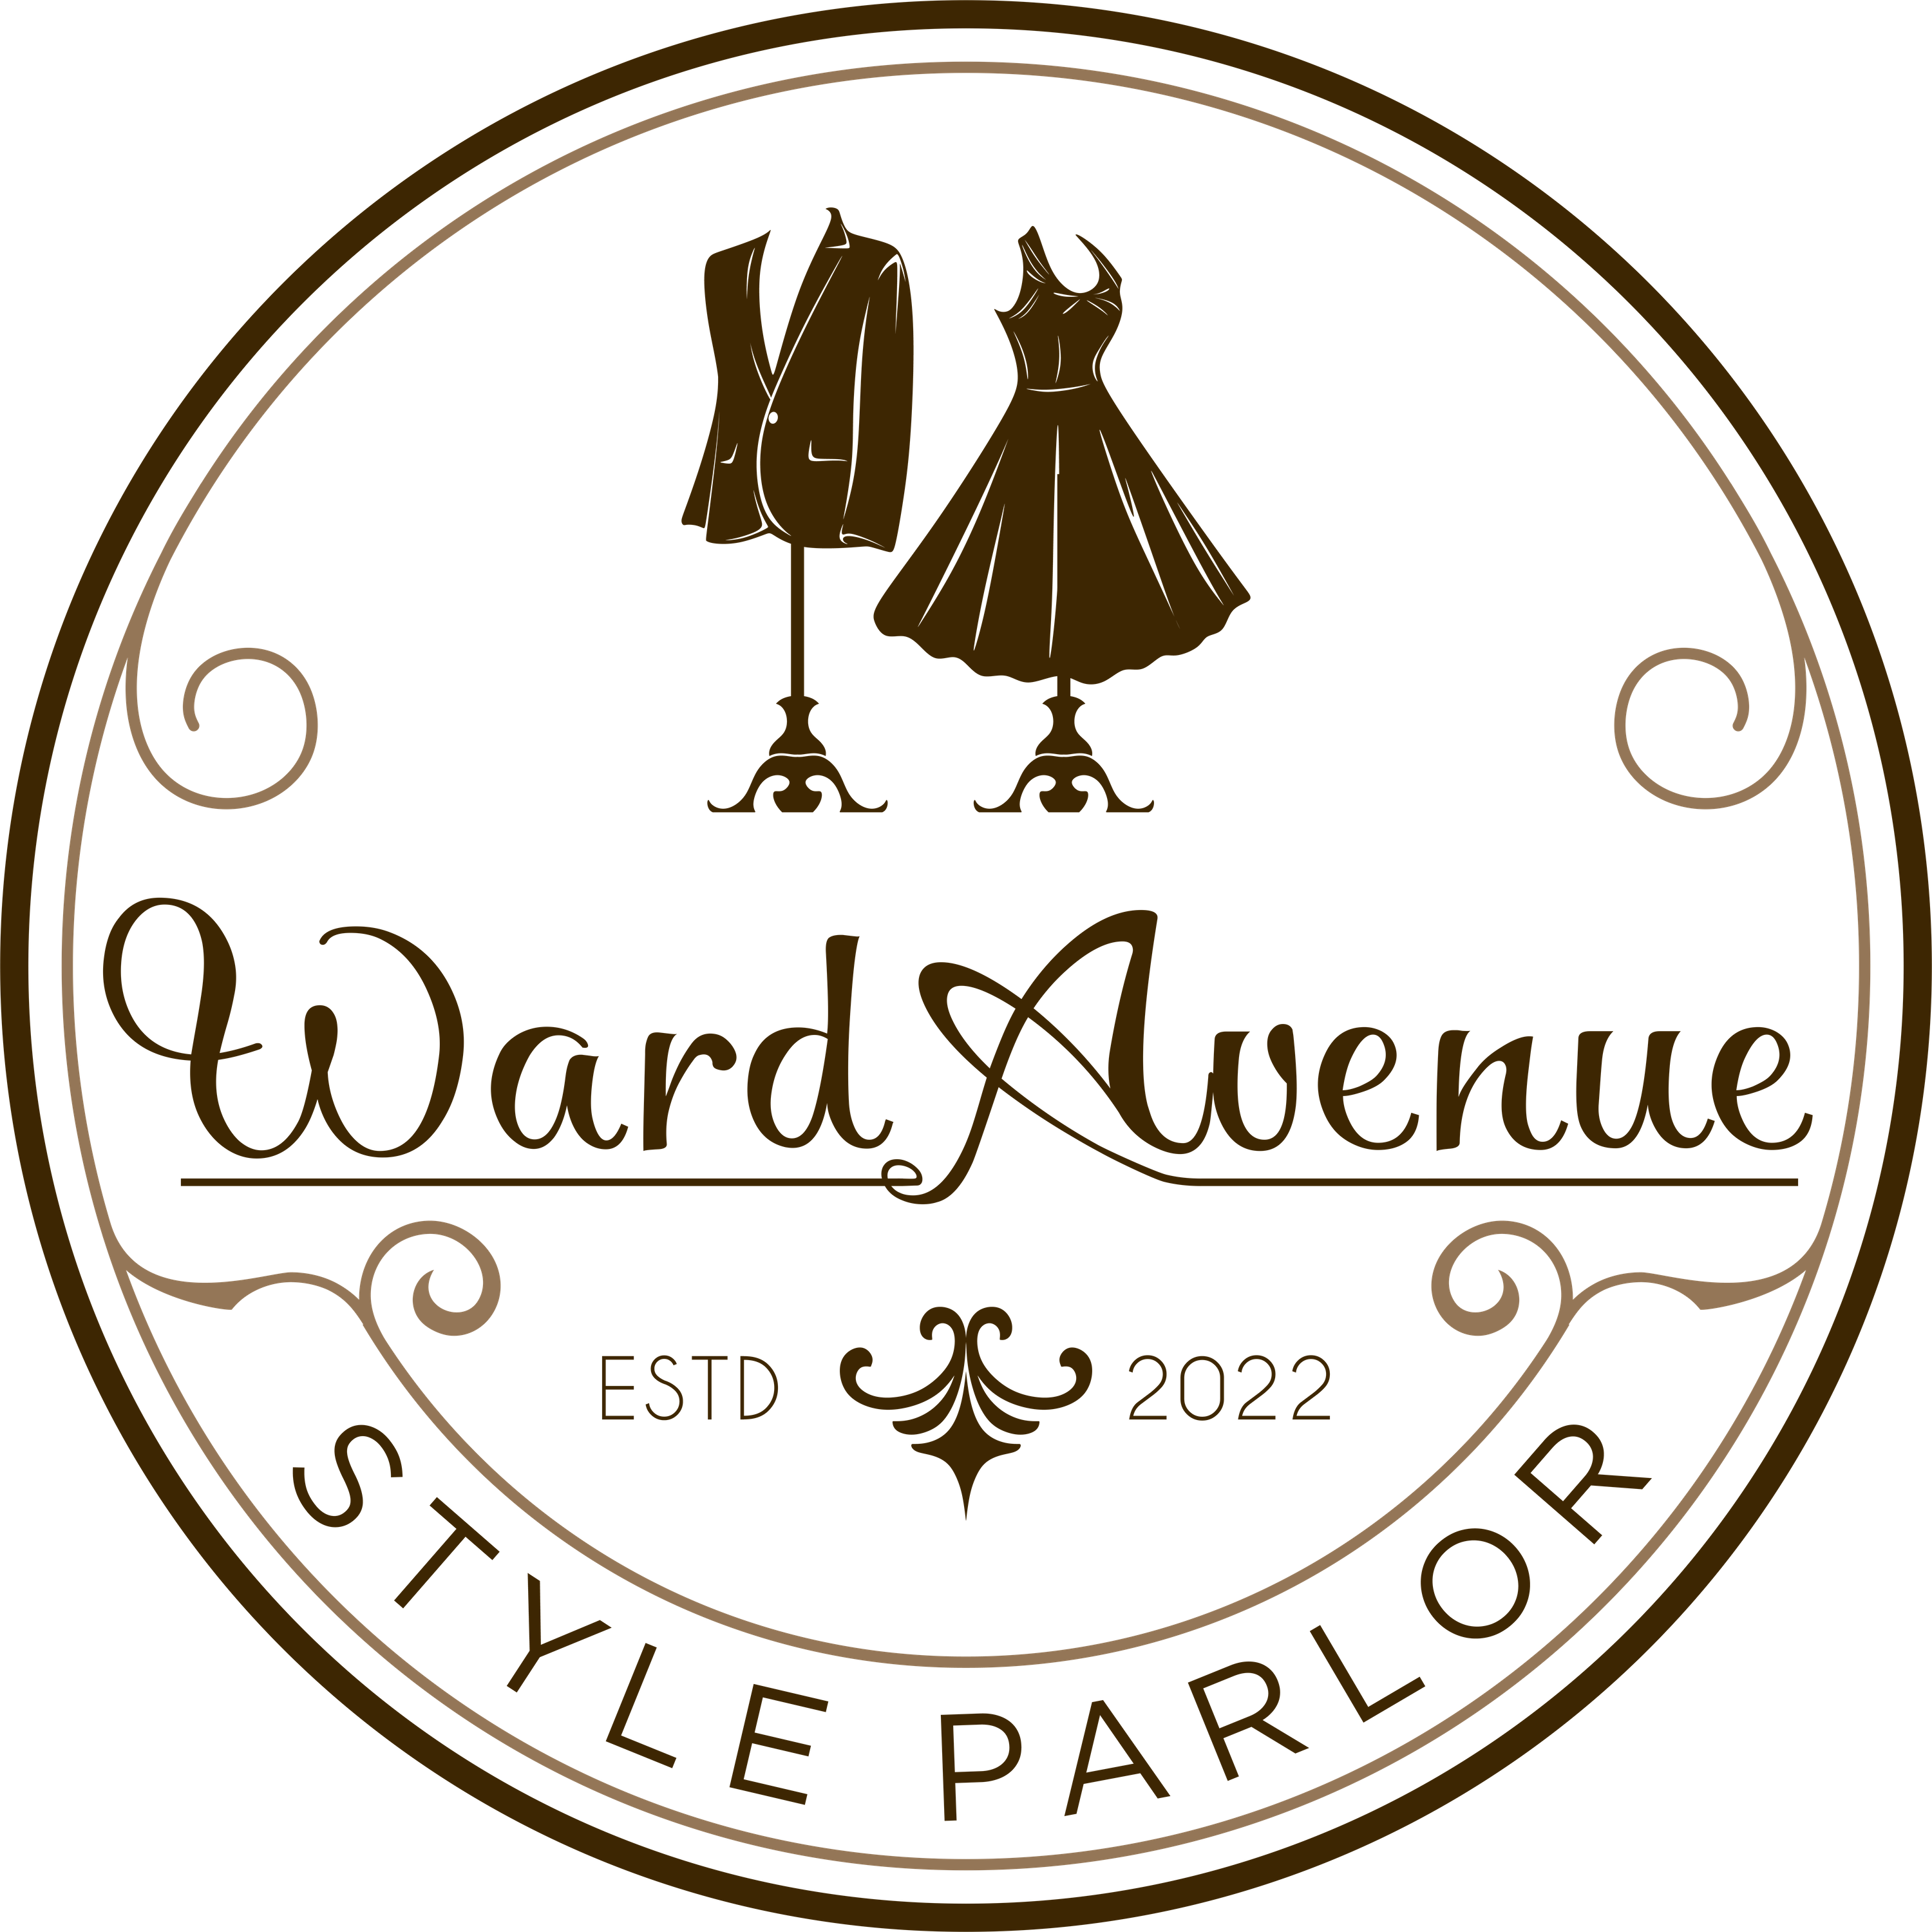 Ward Avenue Style Parlor